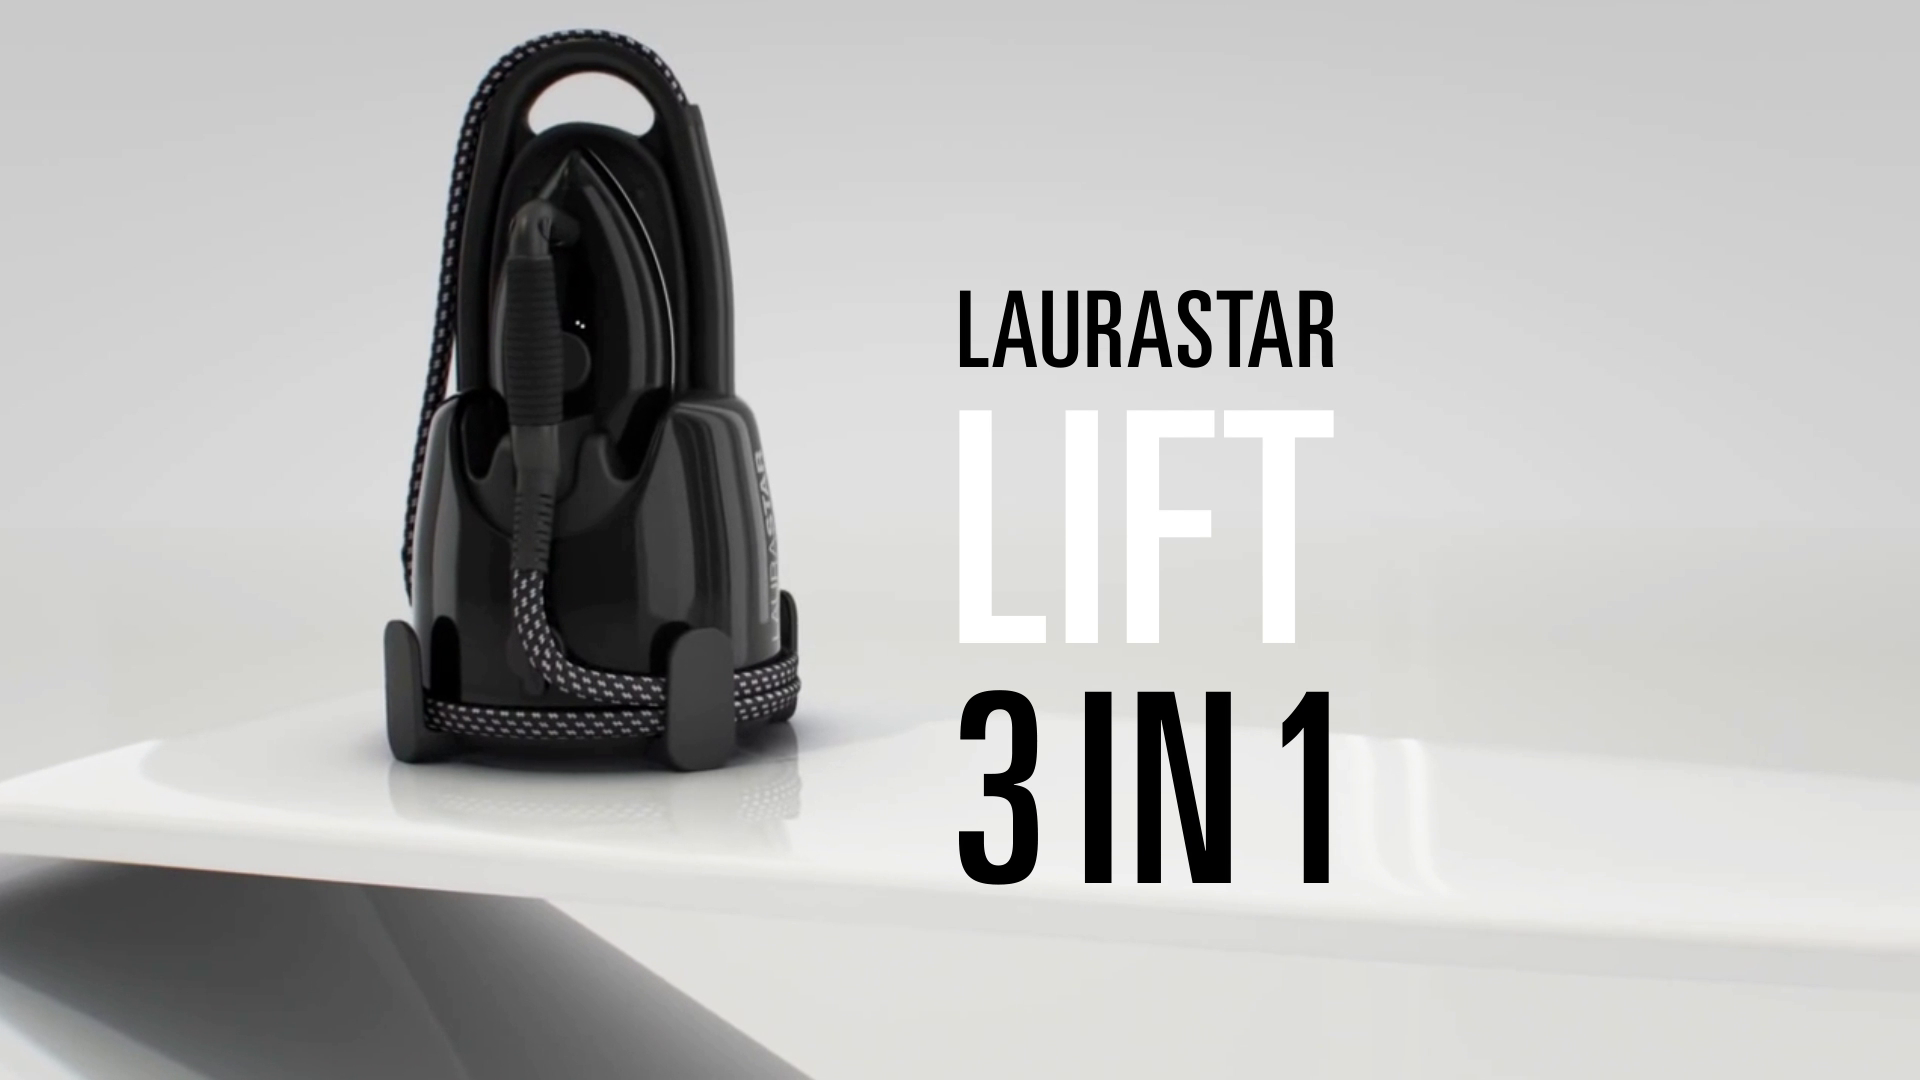 Laurastar Lift+ Steam Iron, Black